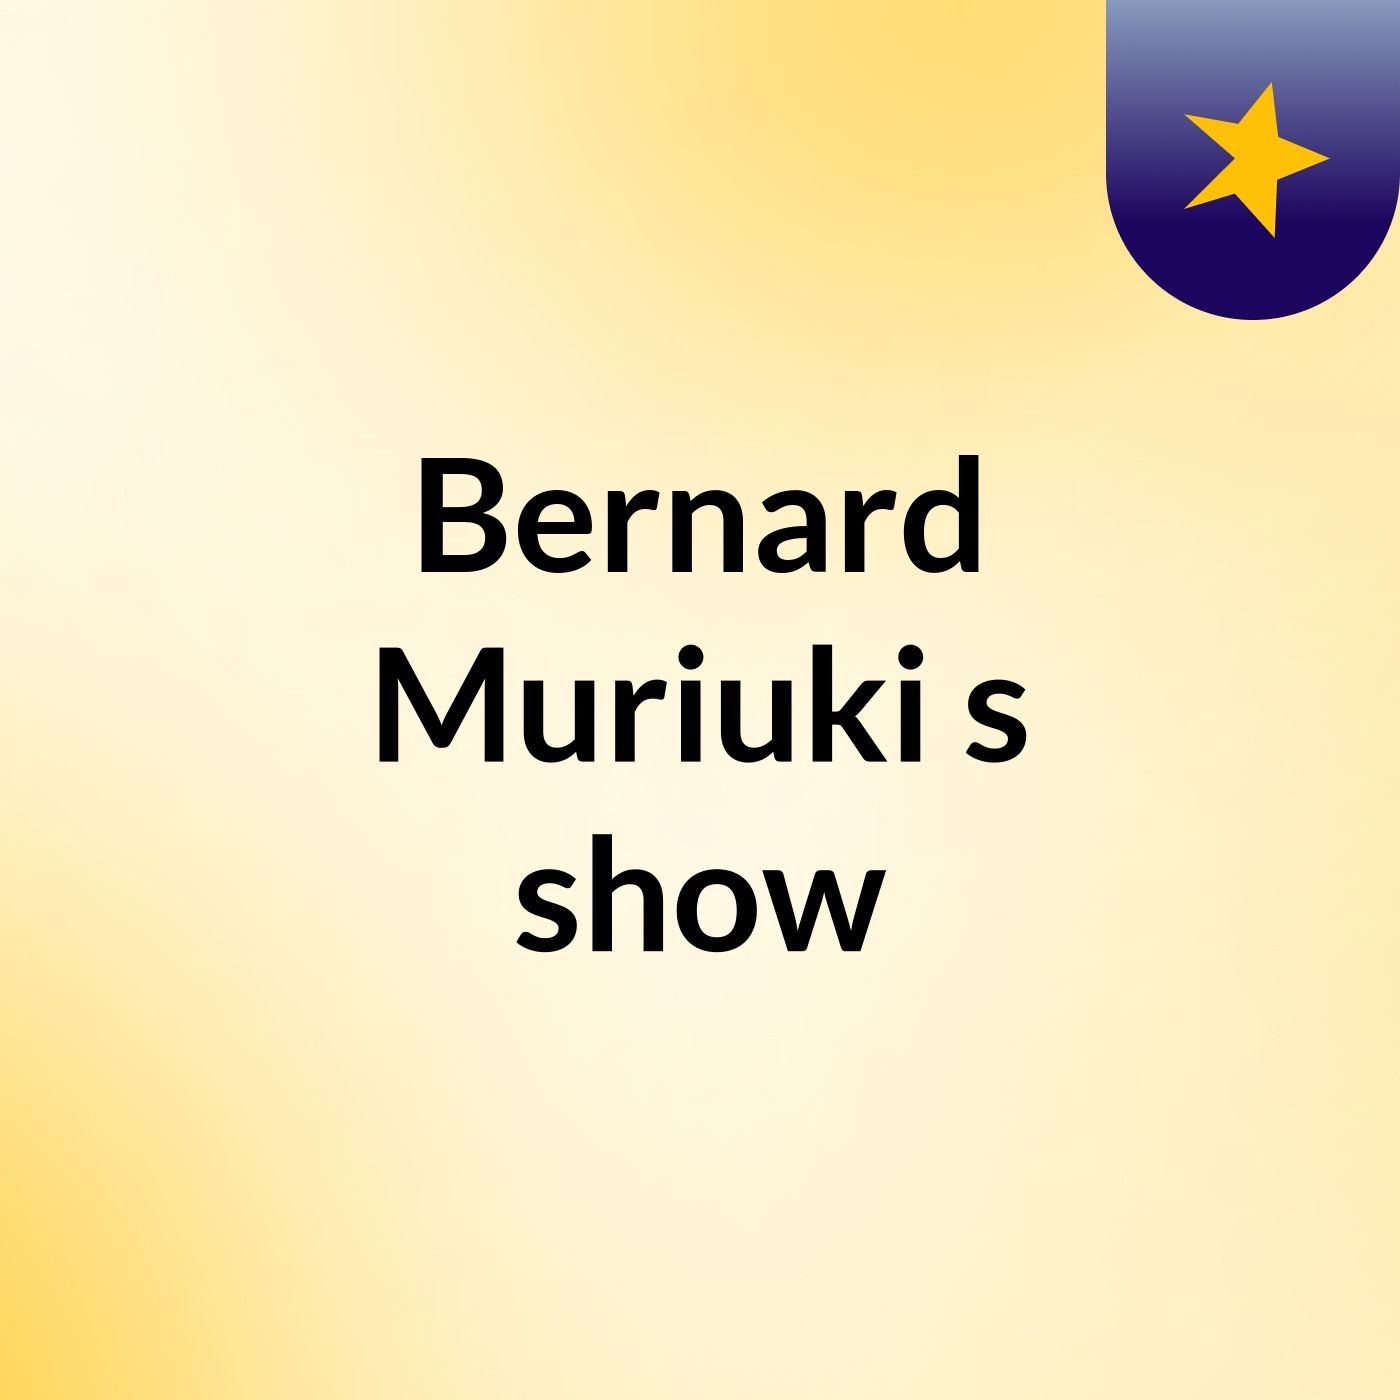 Bernard Muriuki's show